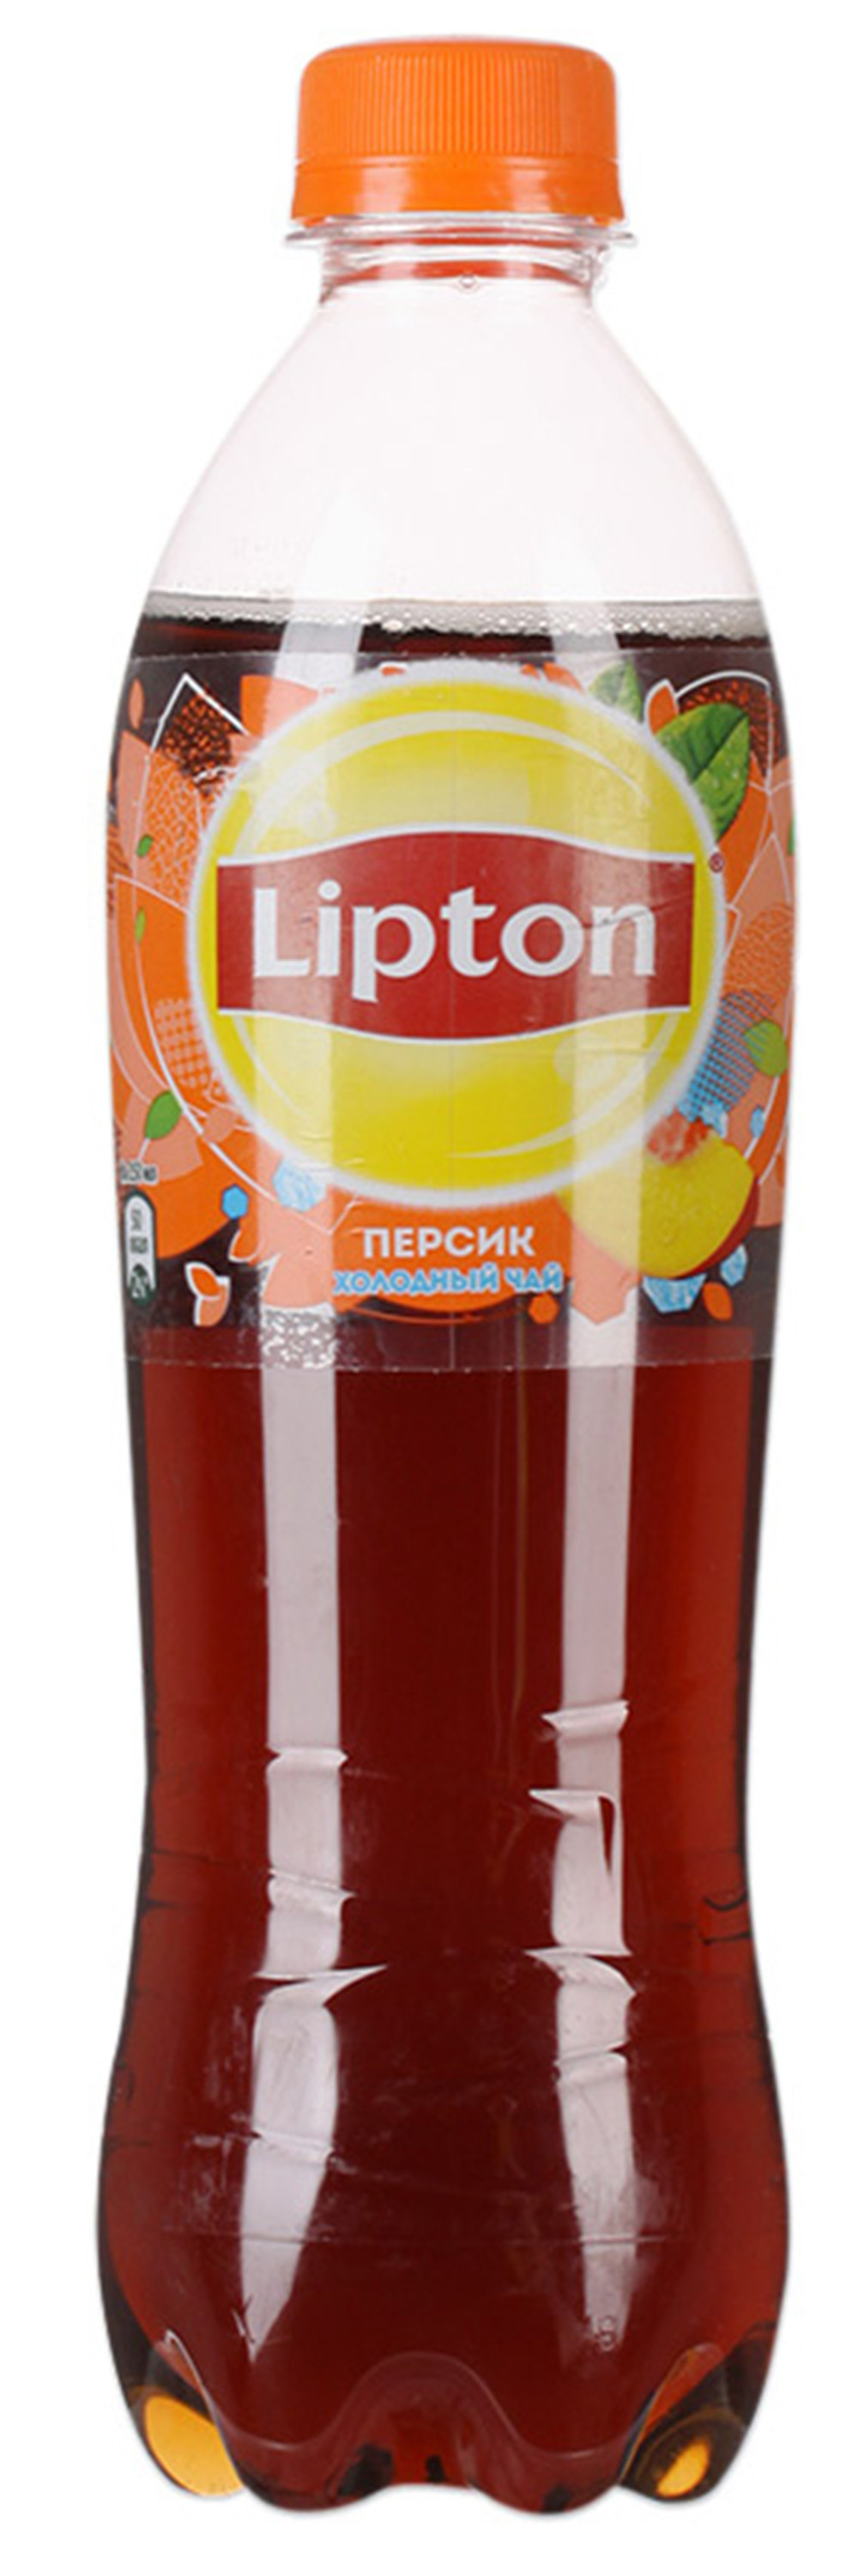 Напиток Липтон персик бут 0.5 л - интернет-магазин Близнецы